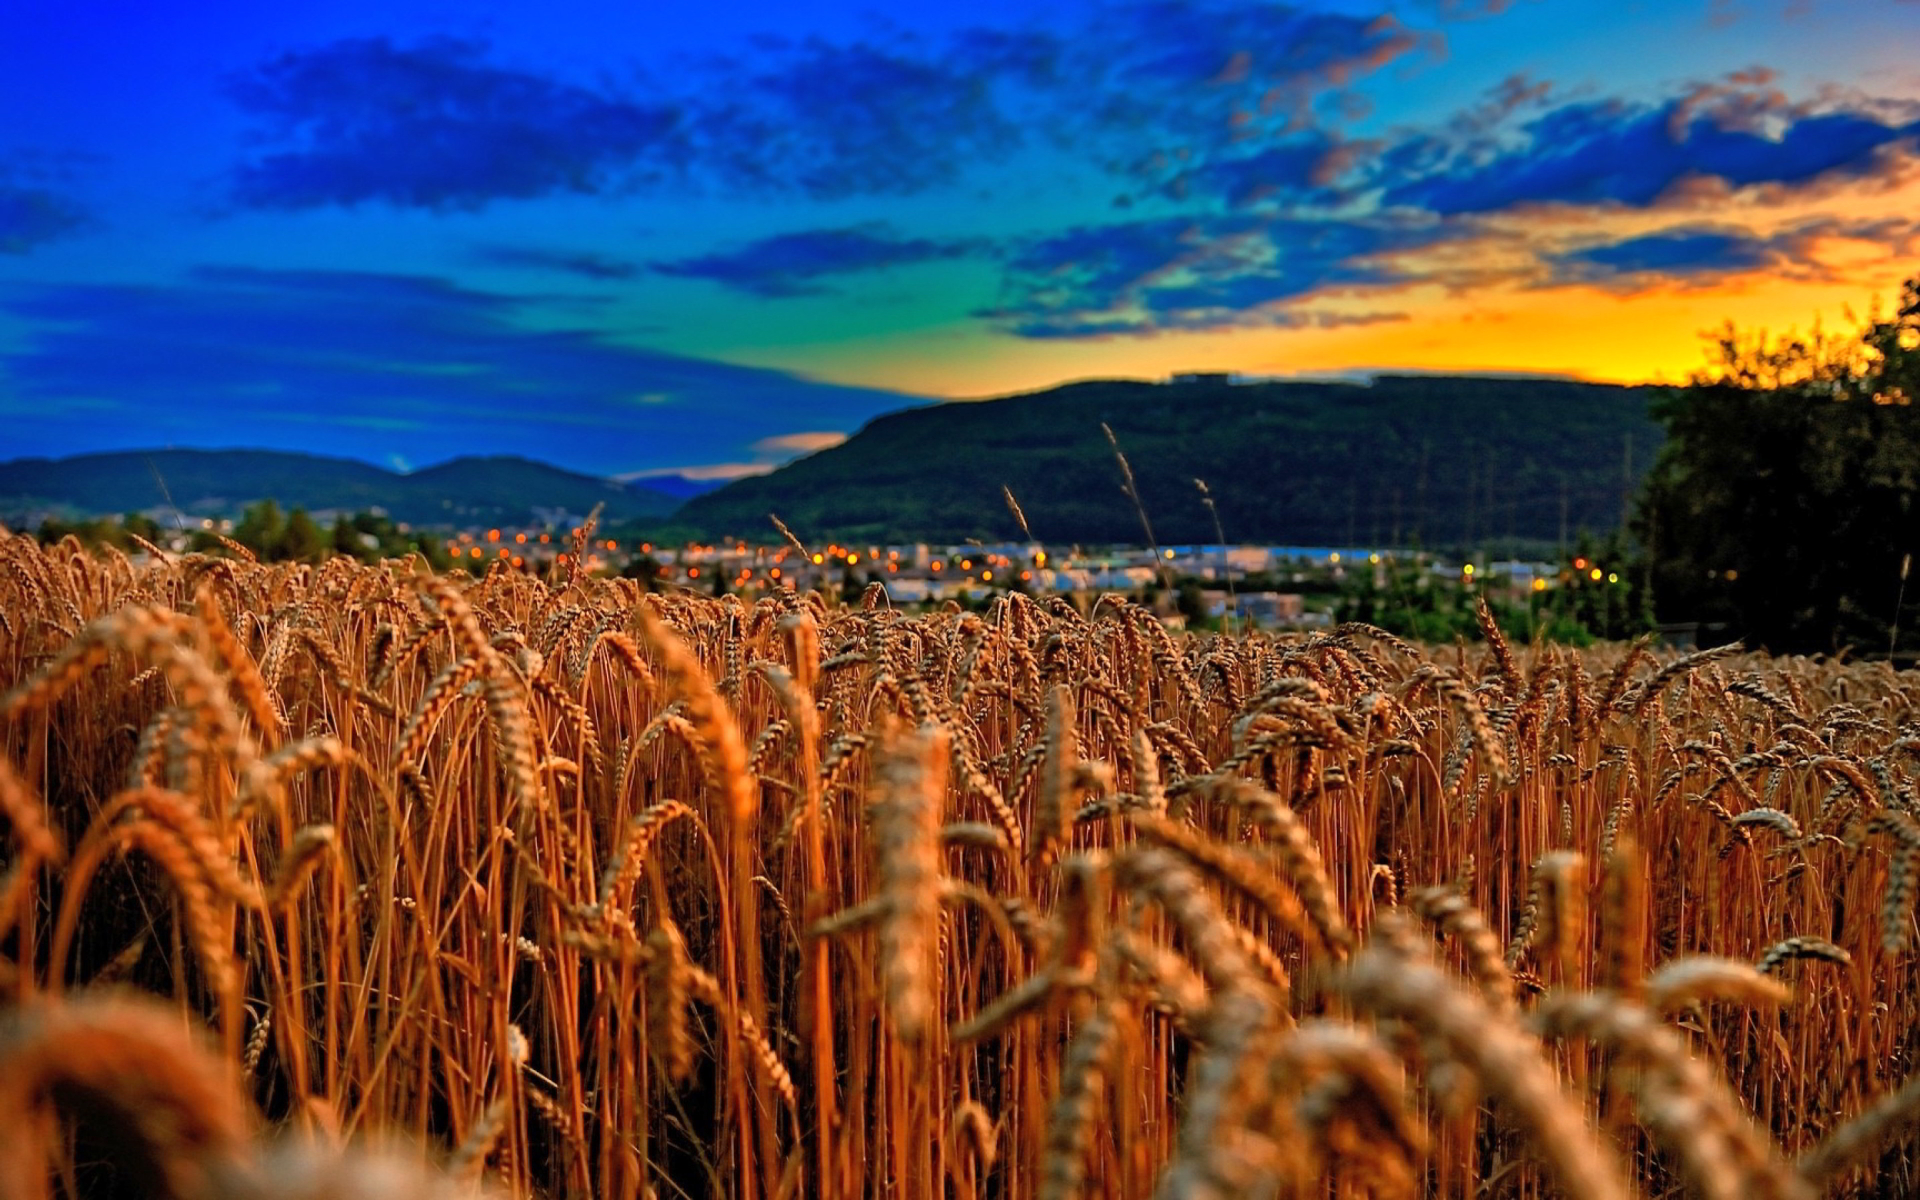 Wheat field evening